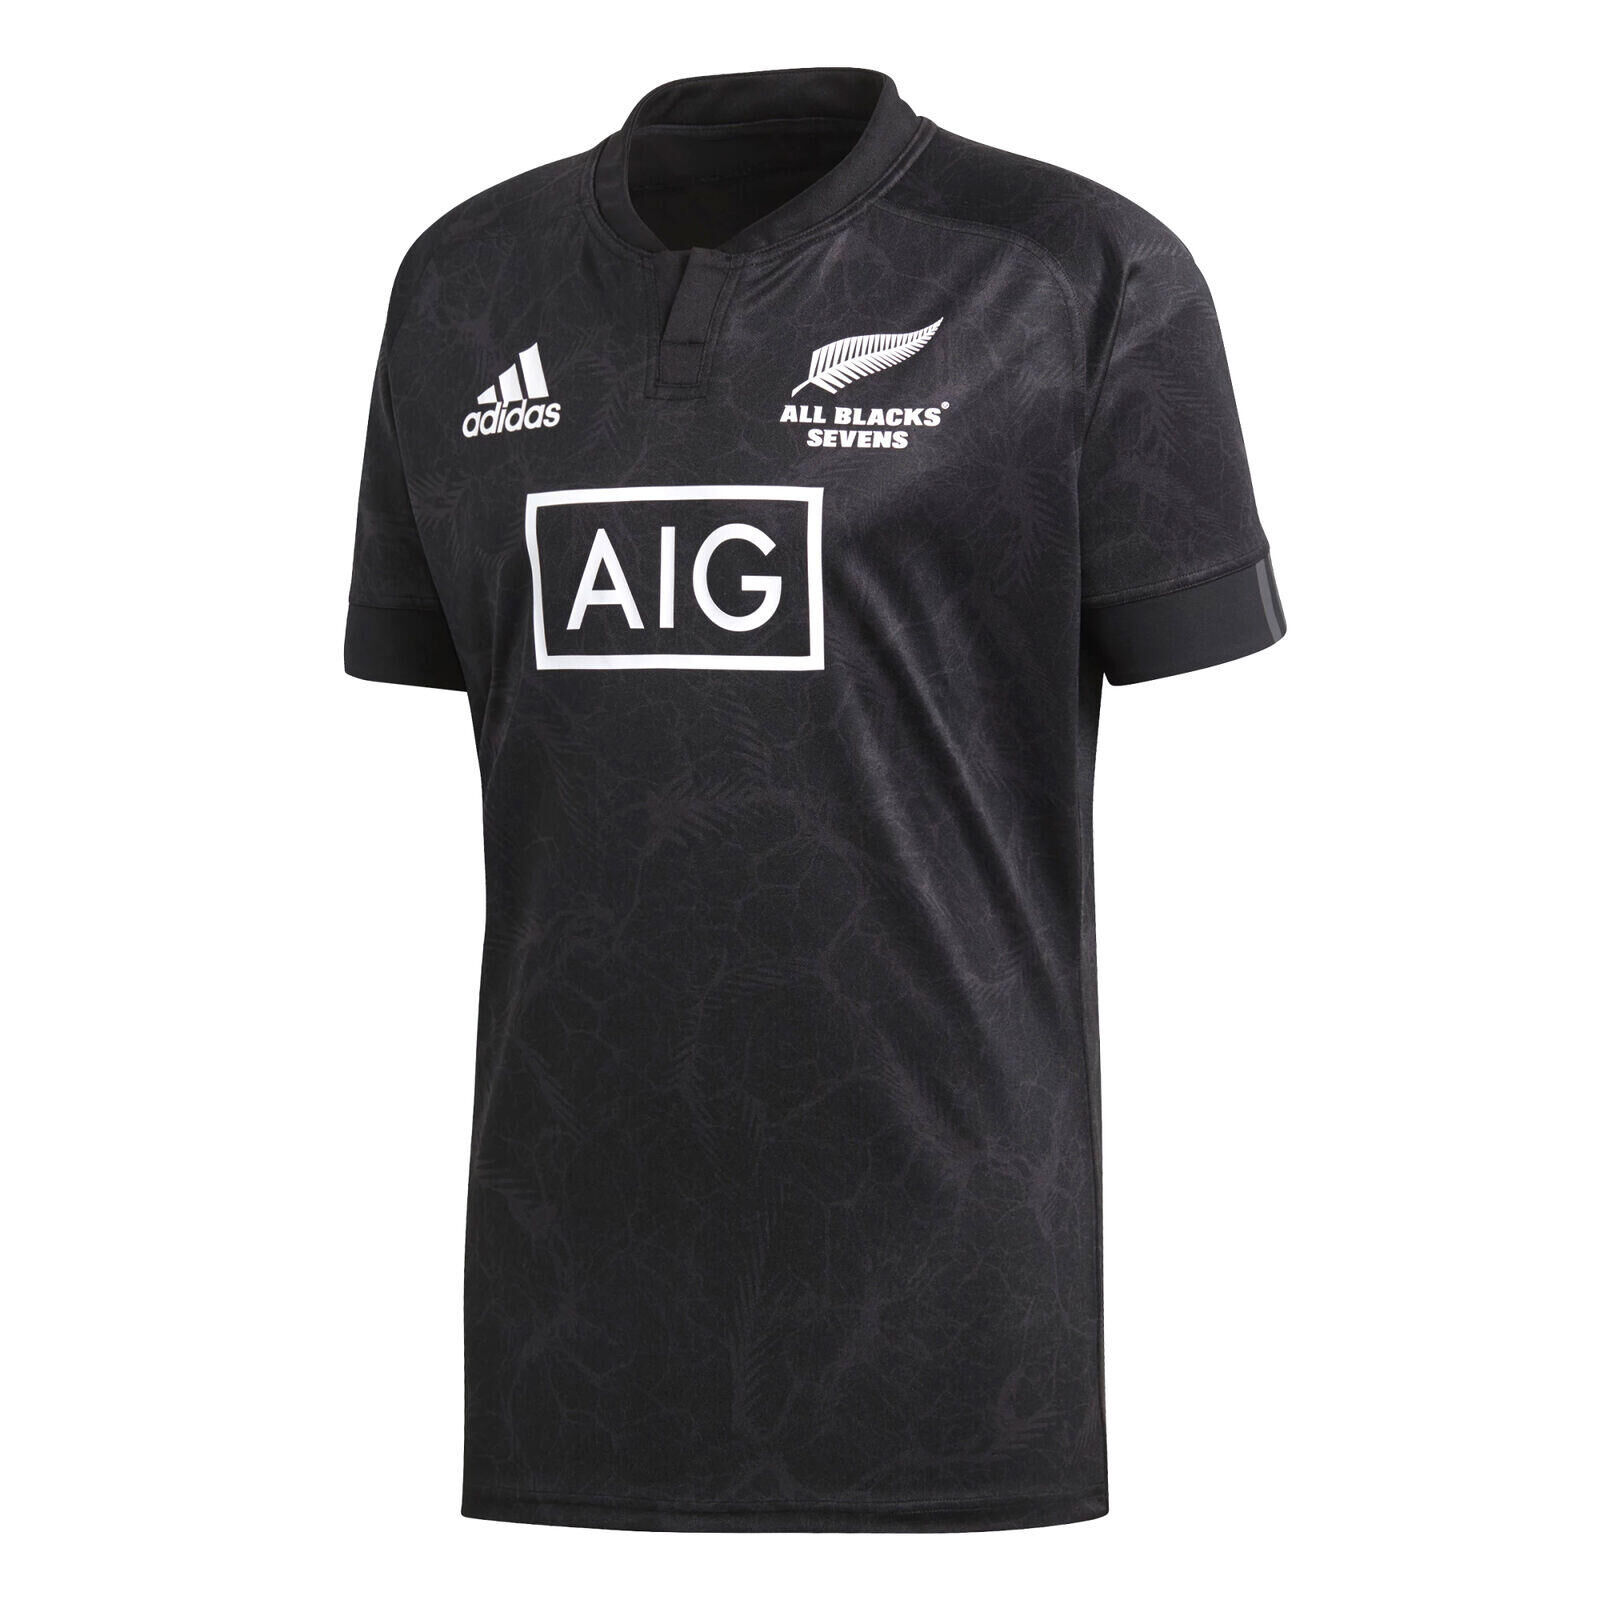 ADIDAS adidas New Zealand All Blacks Sevens Home Rugby Shirt Adults Black